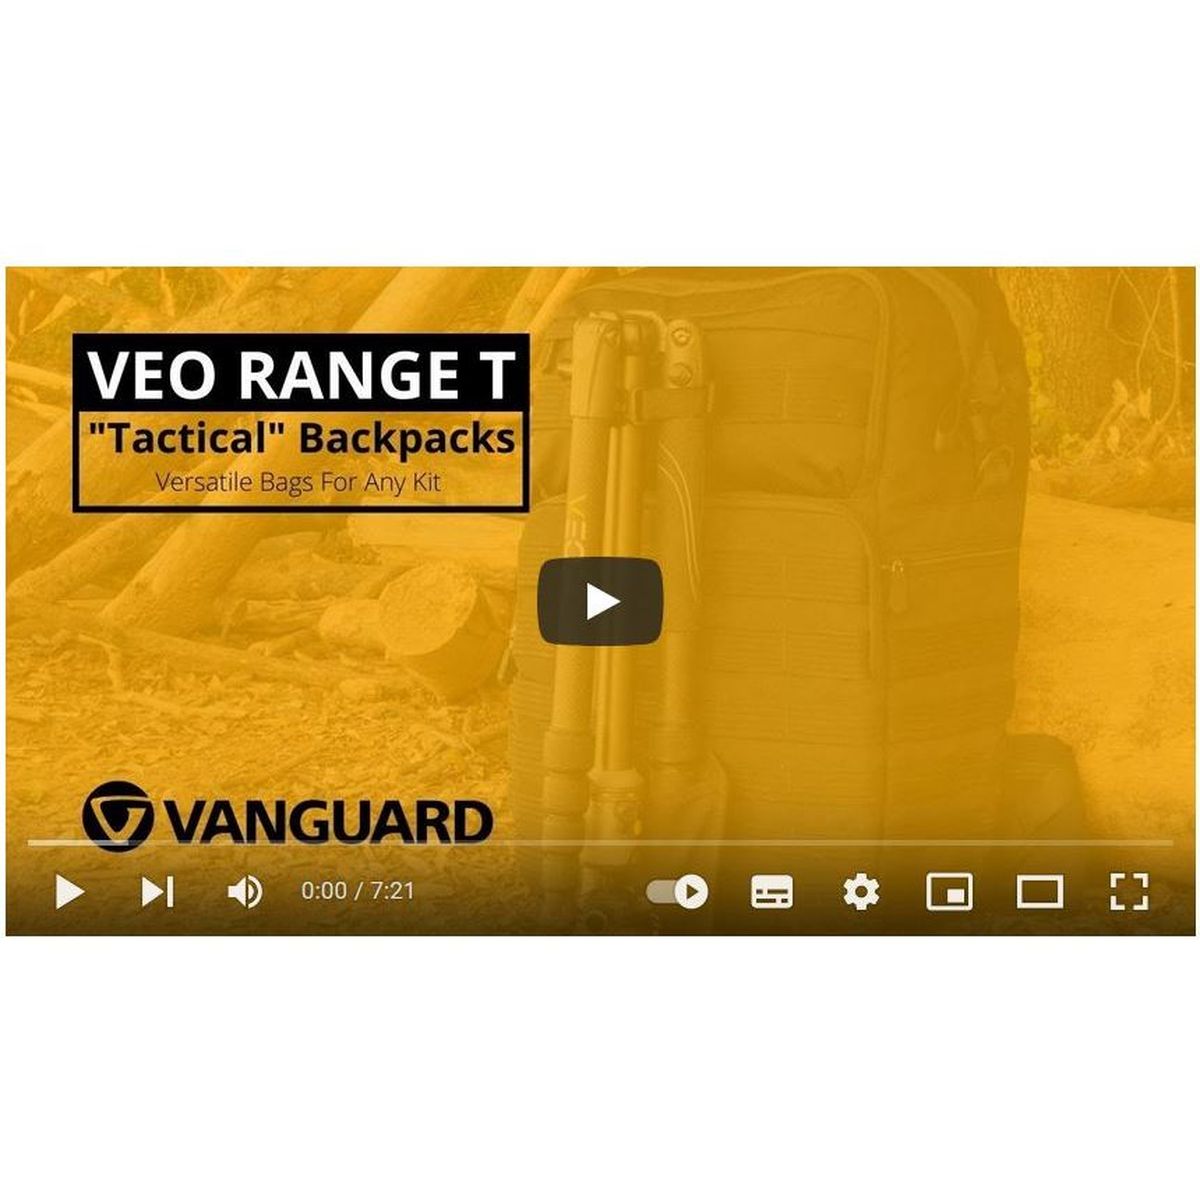 Vanguard VEO Range T 48 BG